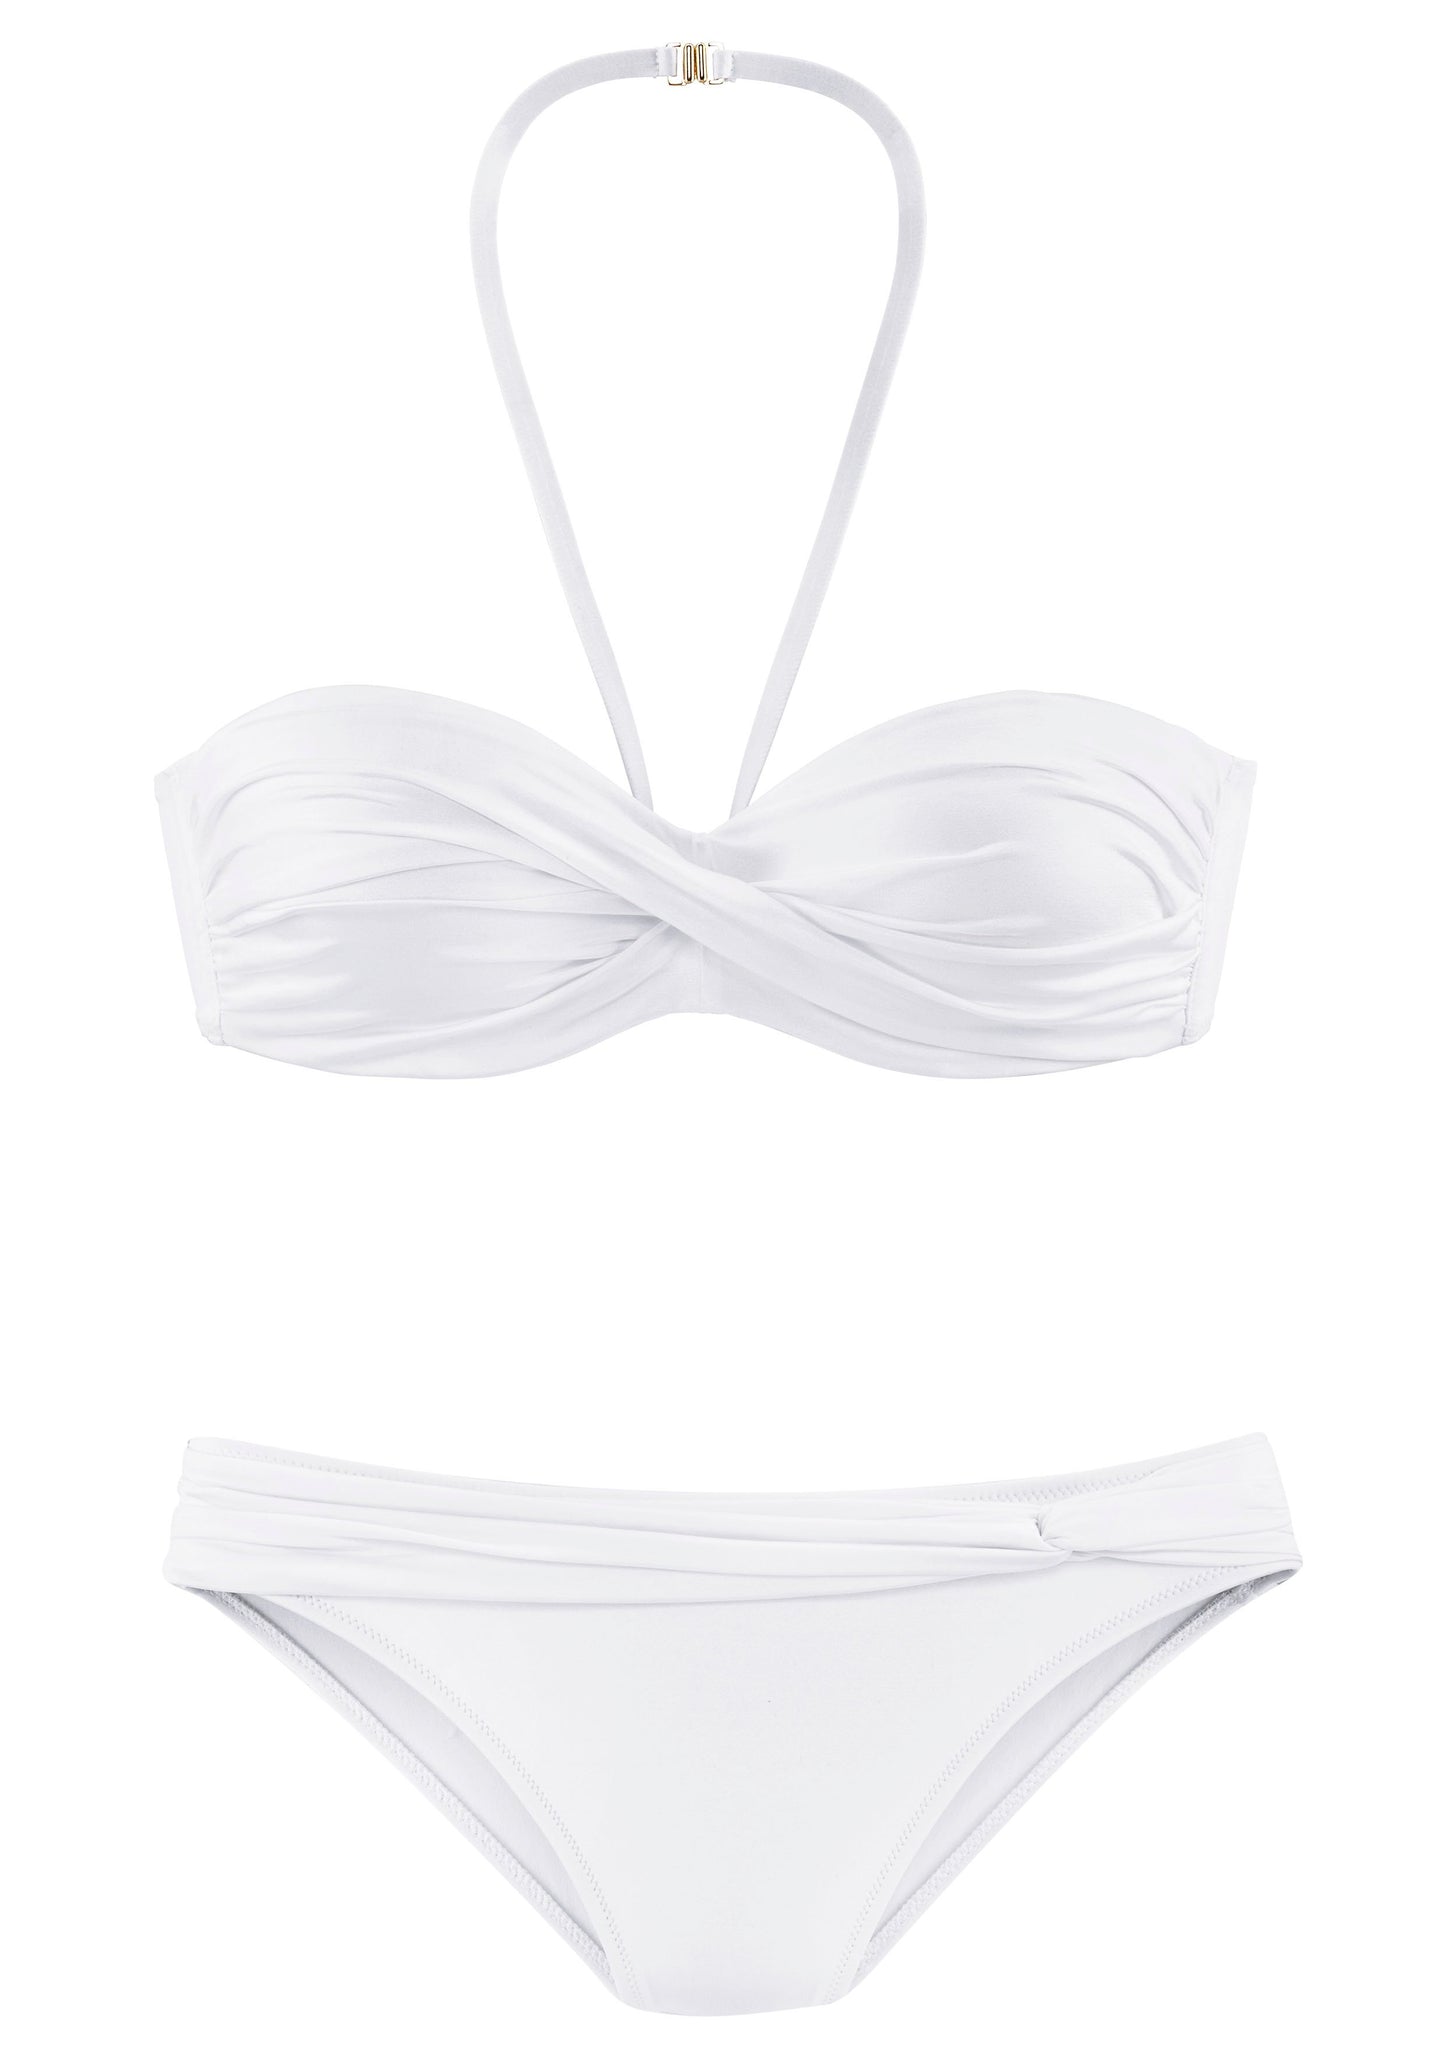 LASCANA Bügel-Bandeau-Bikini (White)